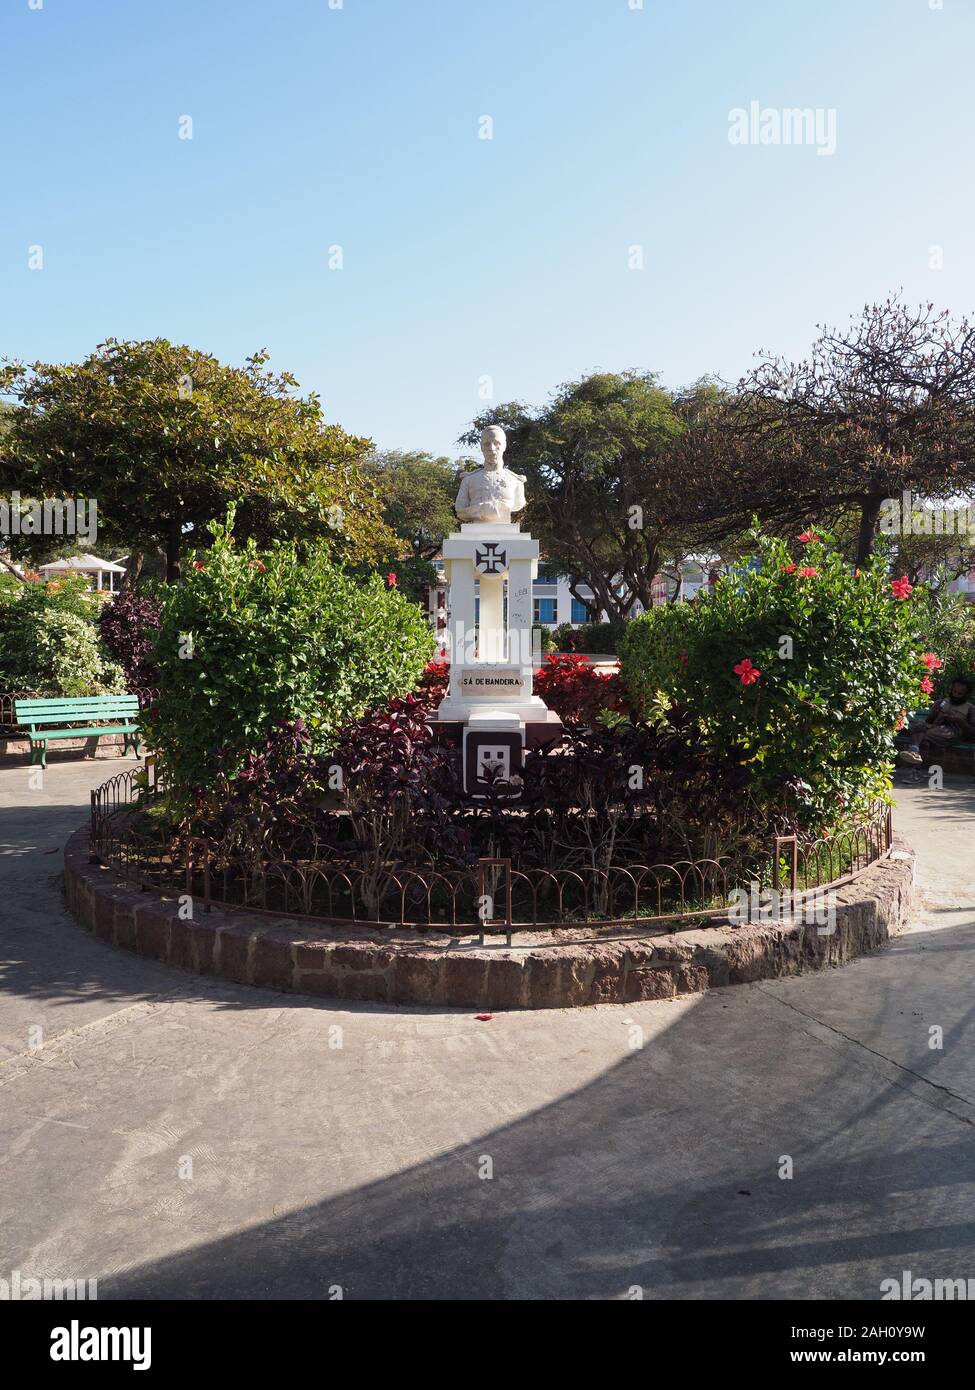 MINDELO, KAP VERDE auf April 2019: Platz mit Sa-da-Baneira am Praça Nova Square, genannt Amilcar Cabral in der afrikanischen Stadt, Insel Sao Vicente, klar Stockfoto